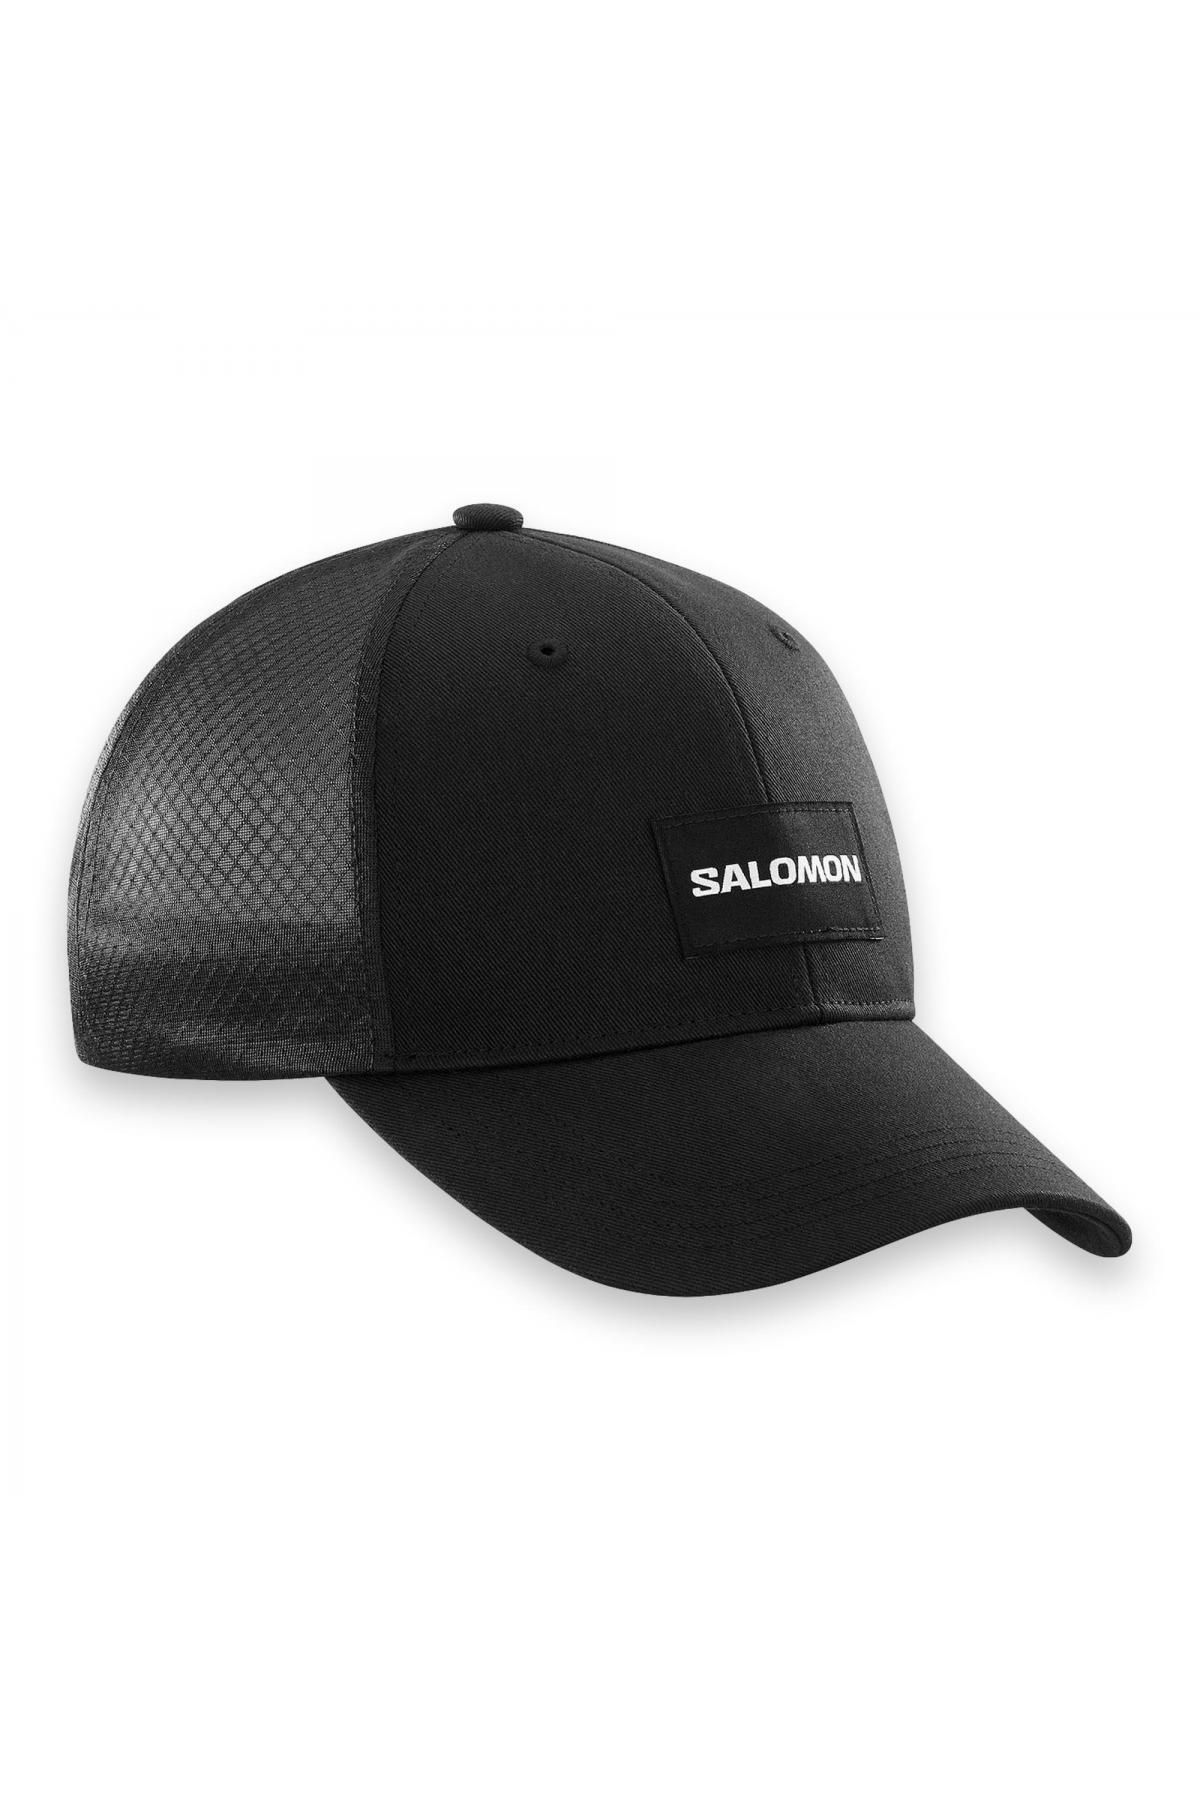 Salomon Lc2024100 Trucker Curved Cap Siyah Unisex Şapka